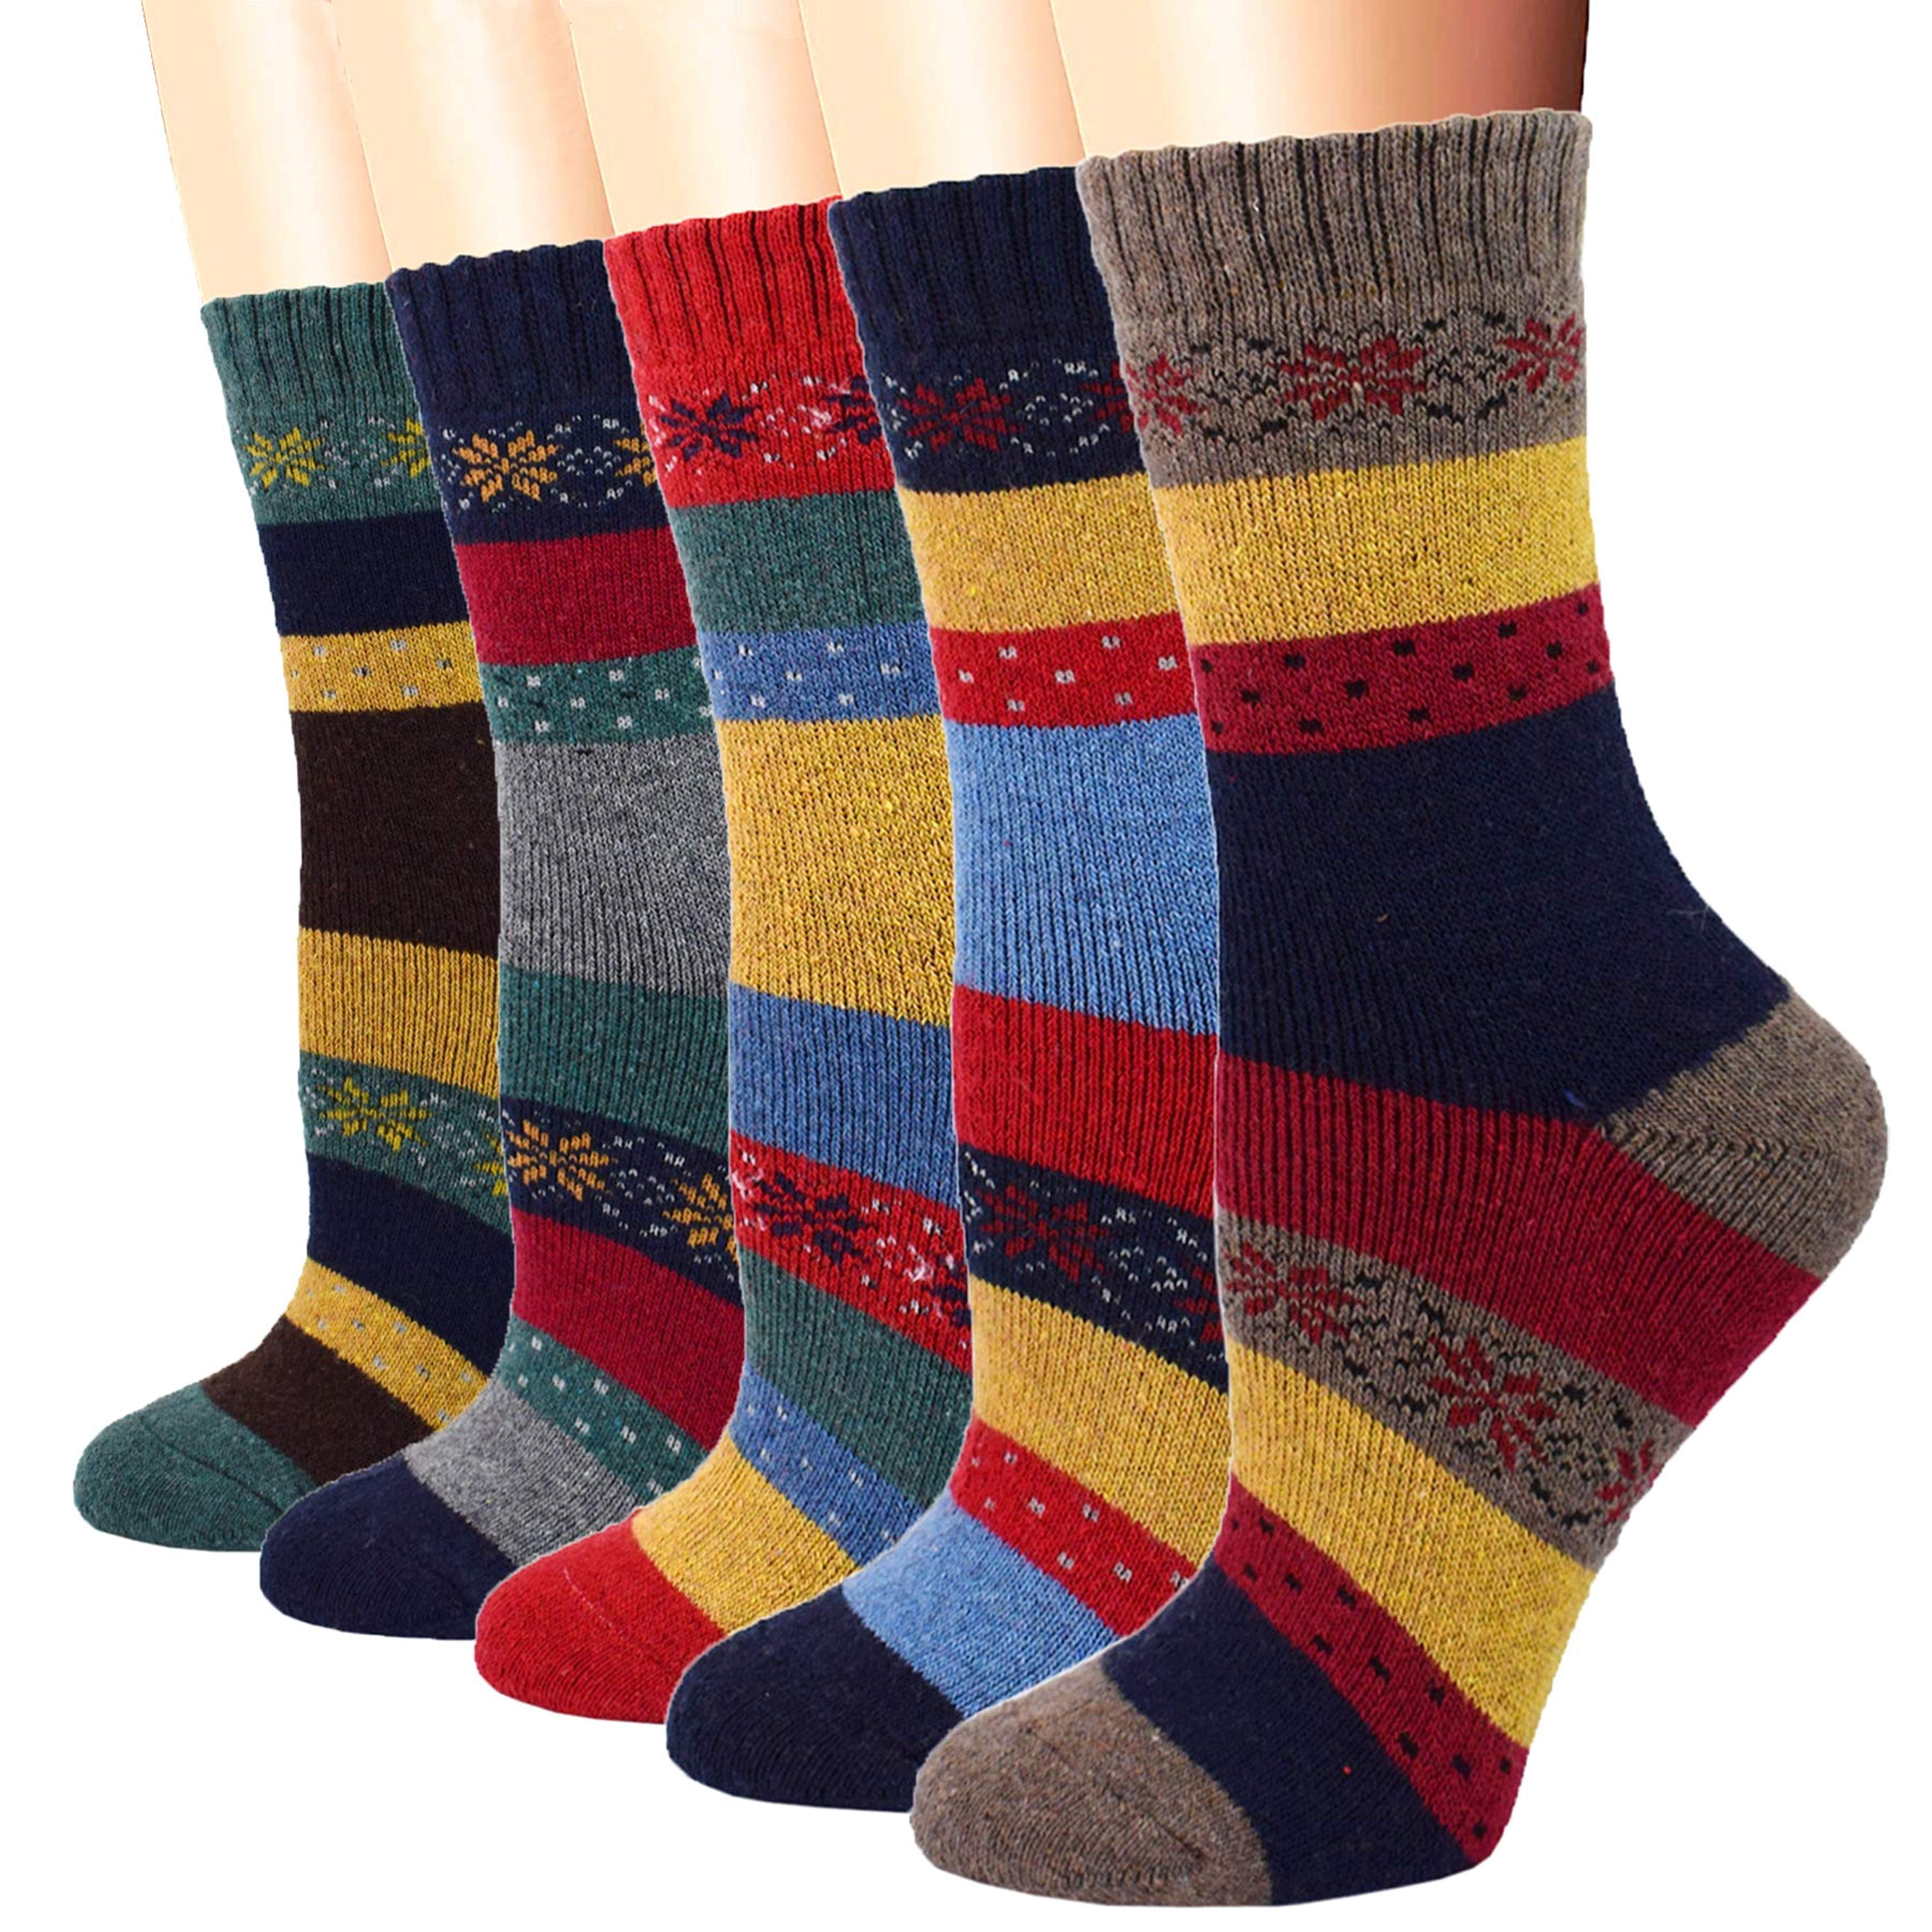 New Unisex Mens/Womens Fashion Multicolor Striped Winter Warm Soft Cotton Socks